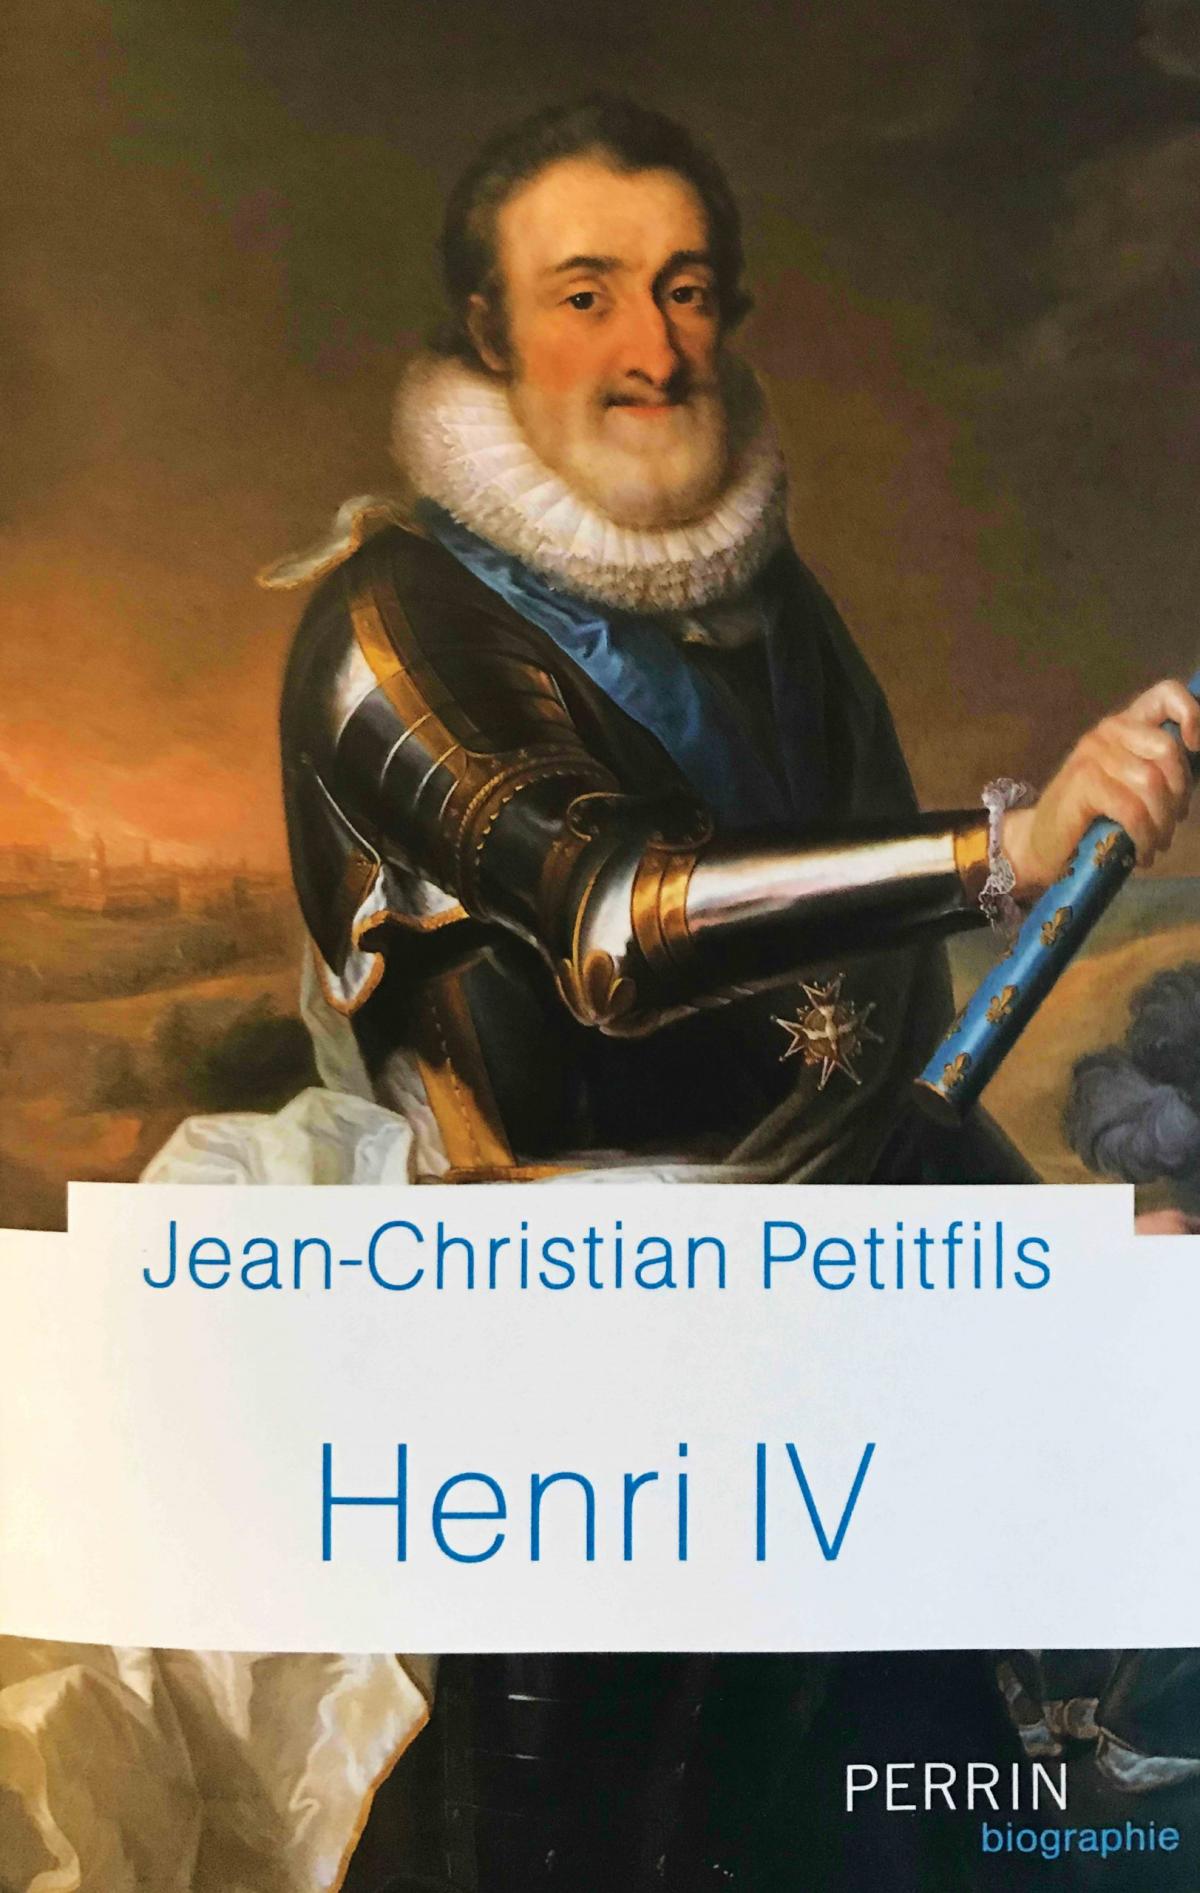 Henri IV de Jean-Christian Petitfils